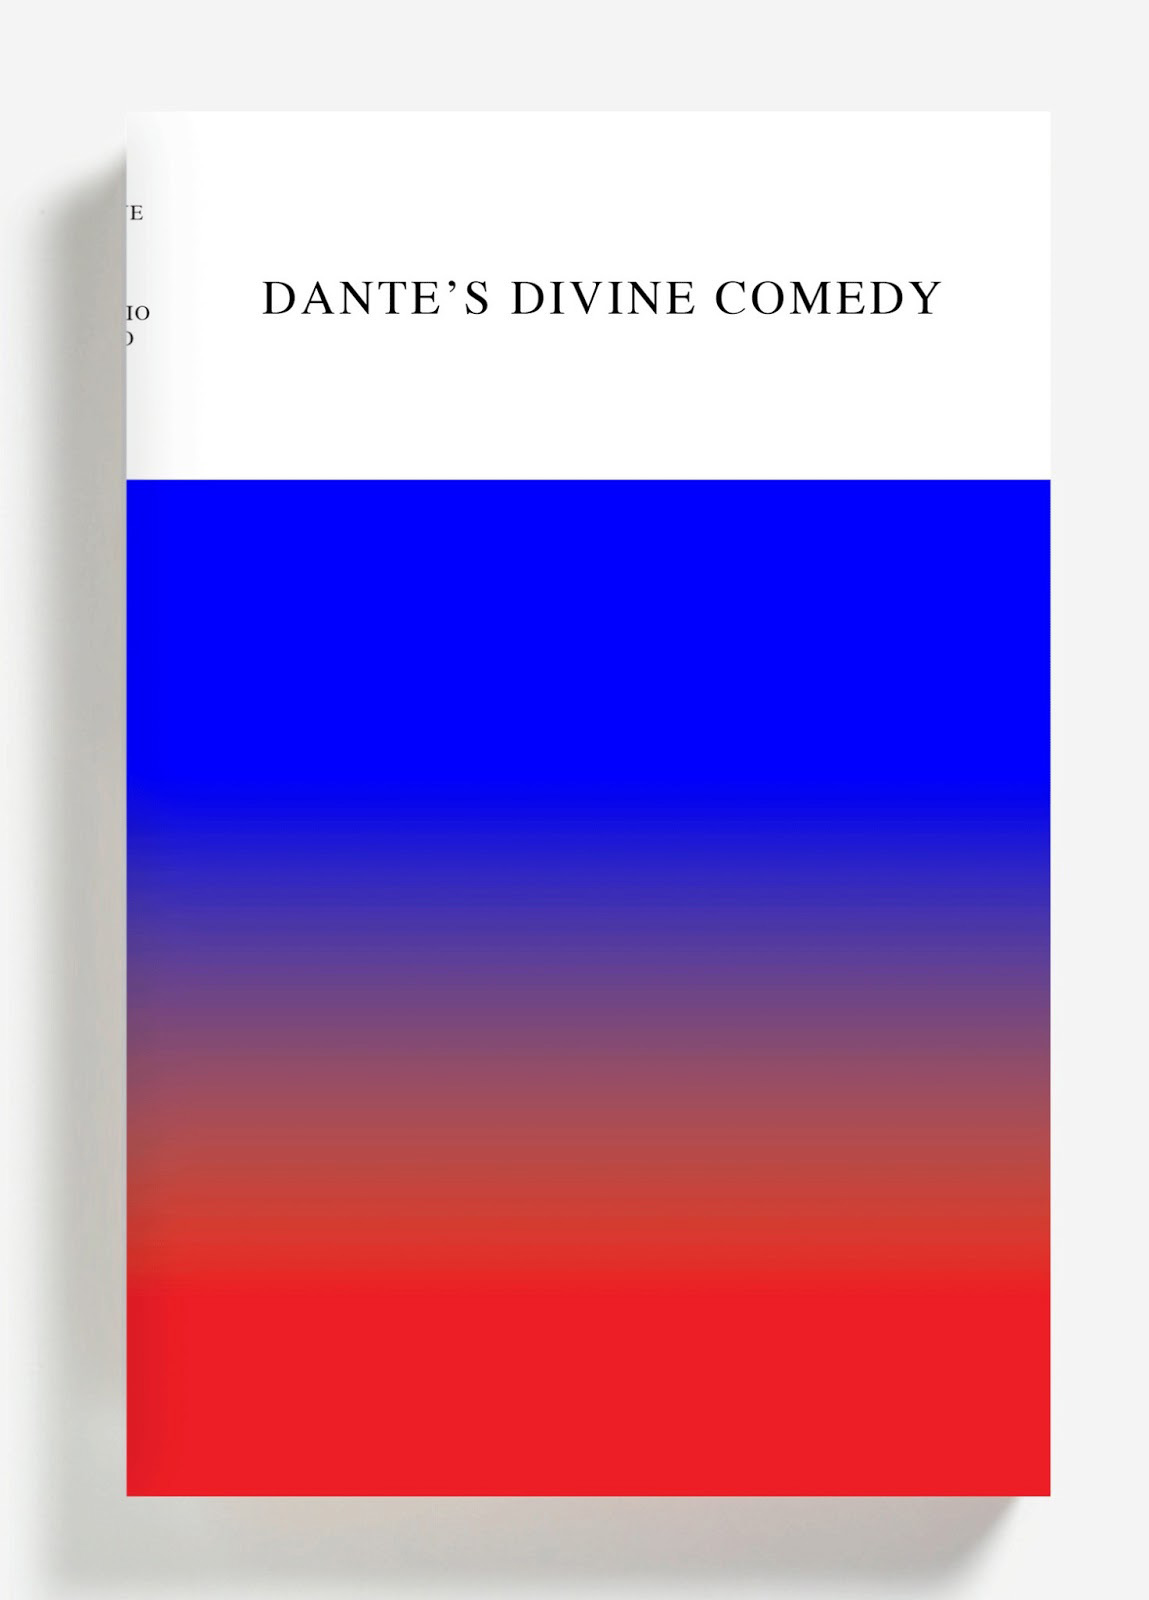 "Dante's Divine Comedy" (diseño de cubierta por Peter Mendelsund)